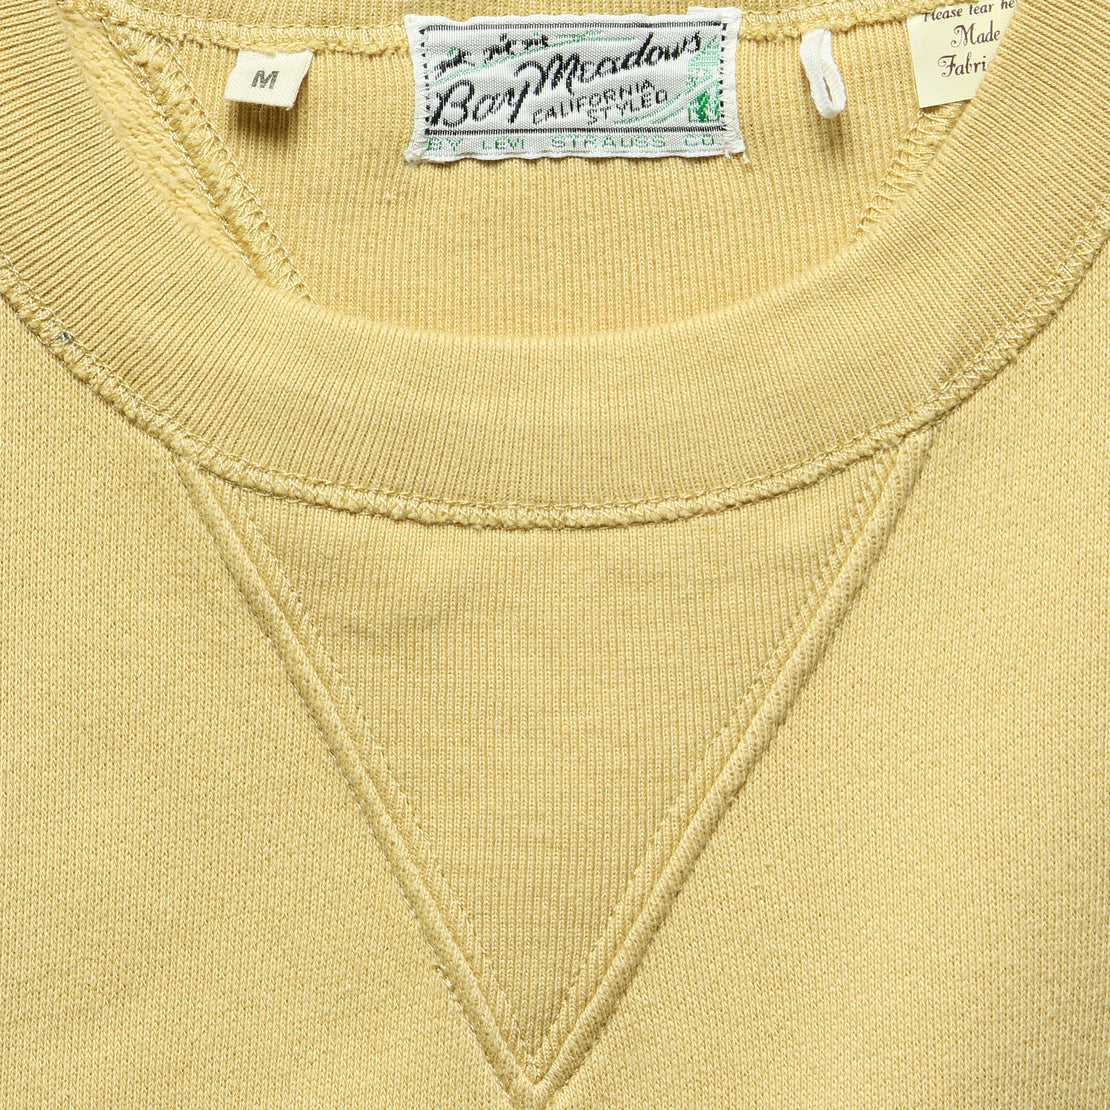 Bay Meadows Sweatshirt - Custard - Levis Vintage Clothing - STAG Provisions - Tops - Fleece / Sweatshirt